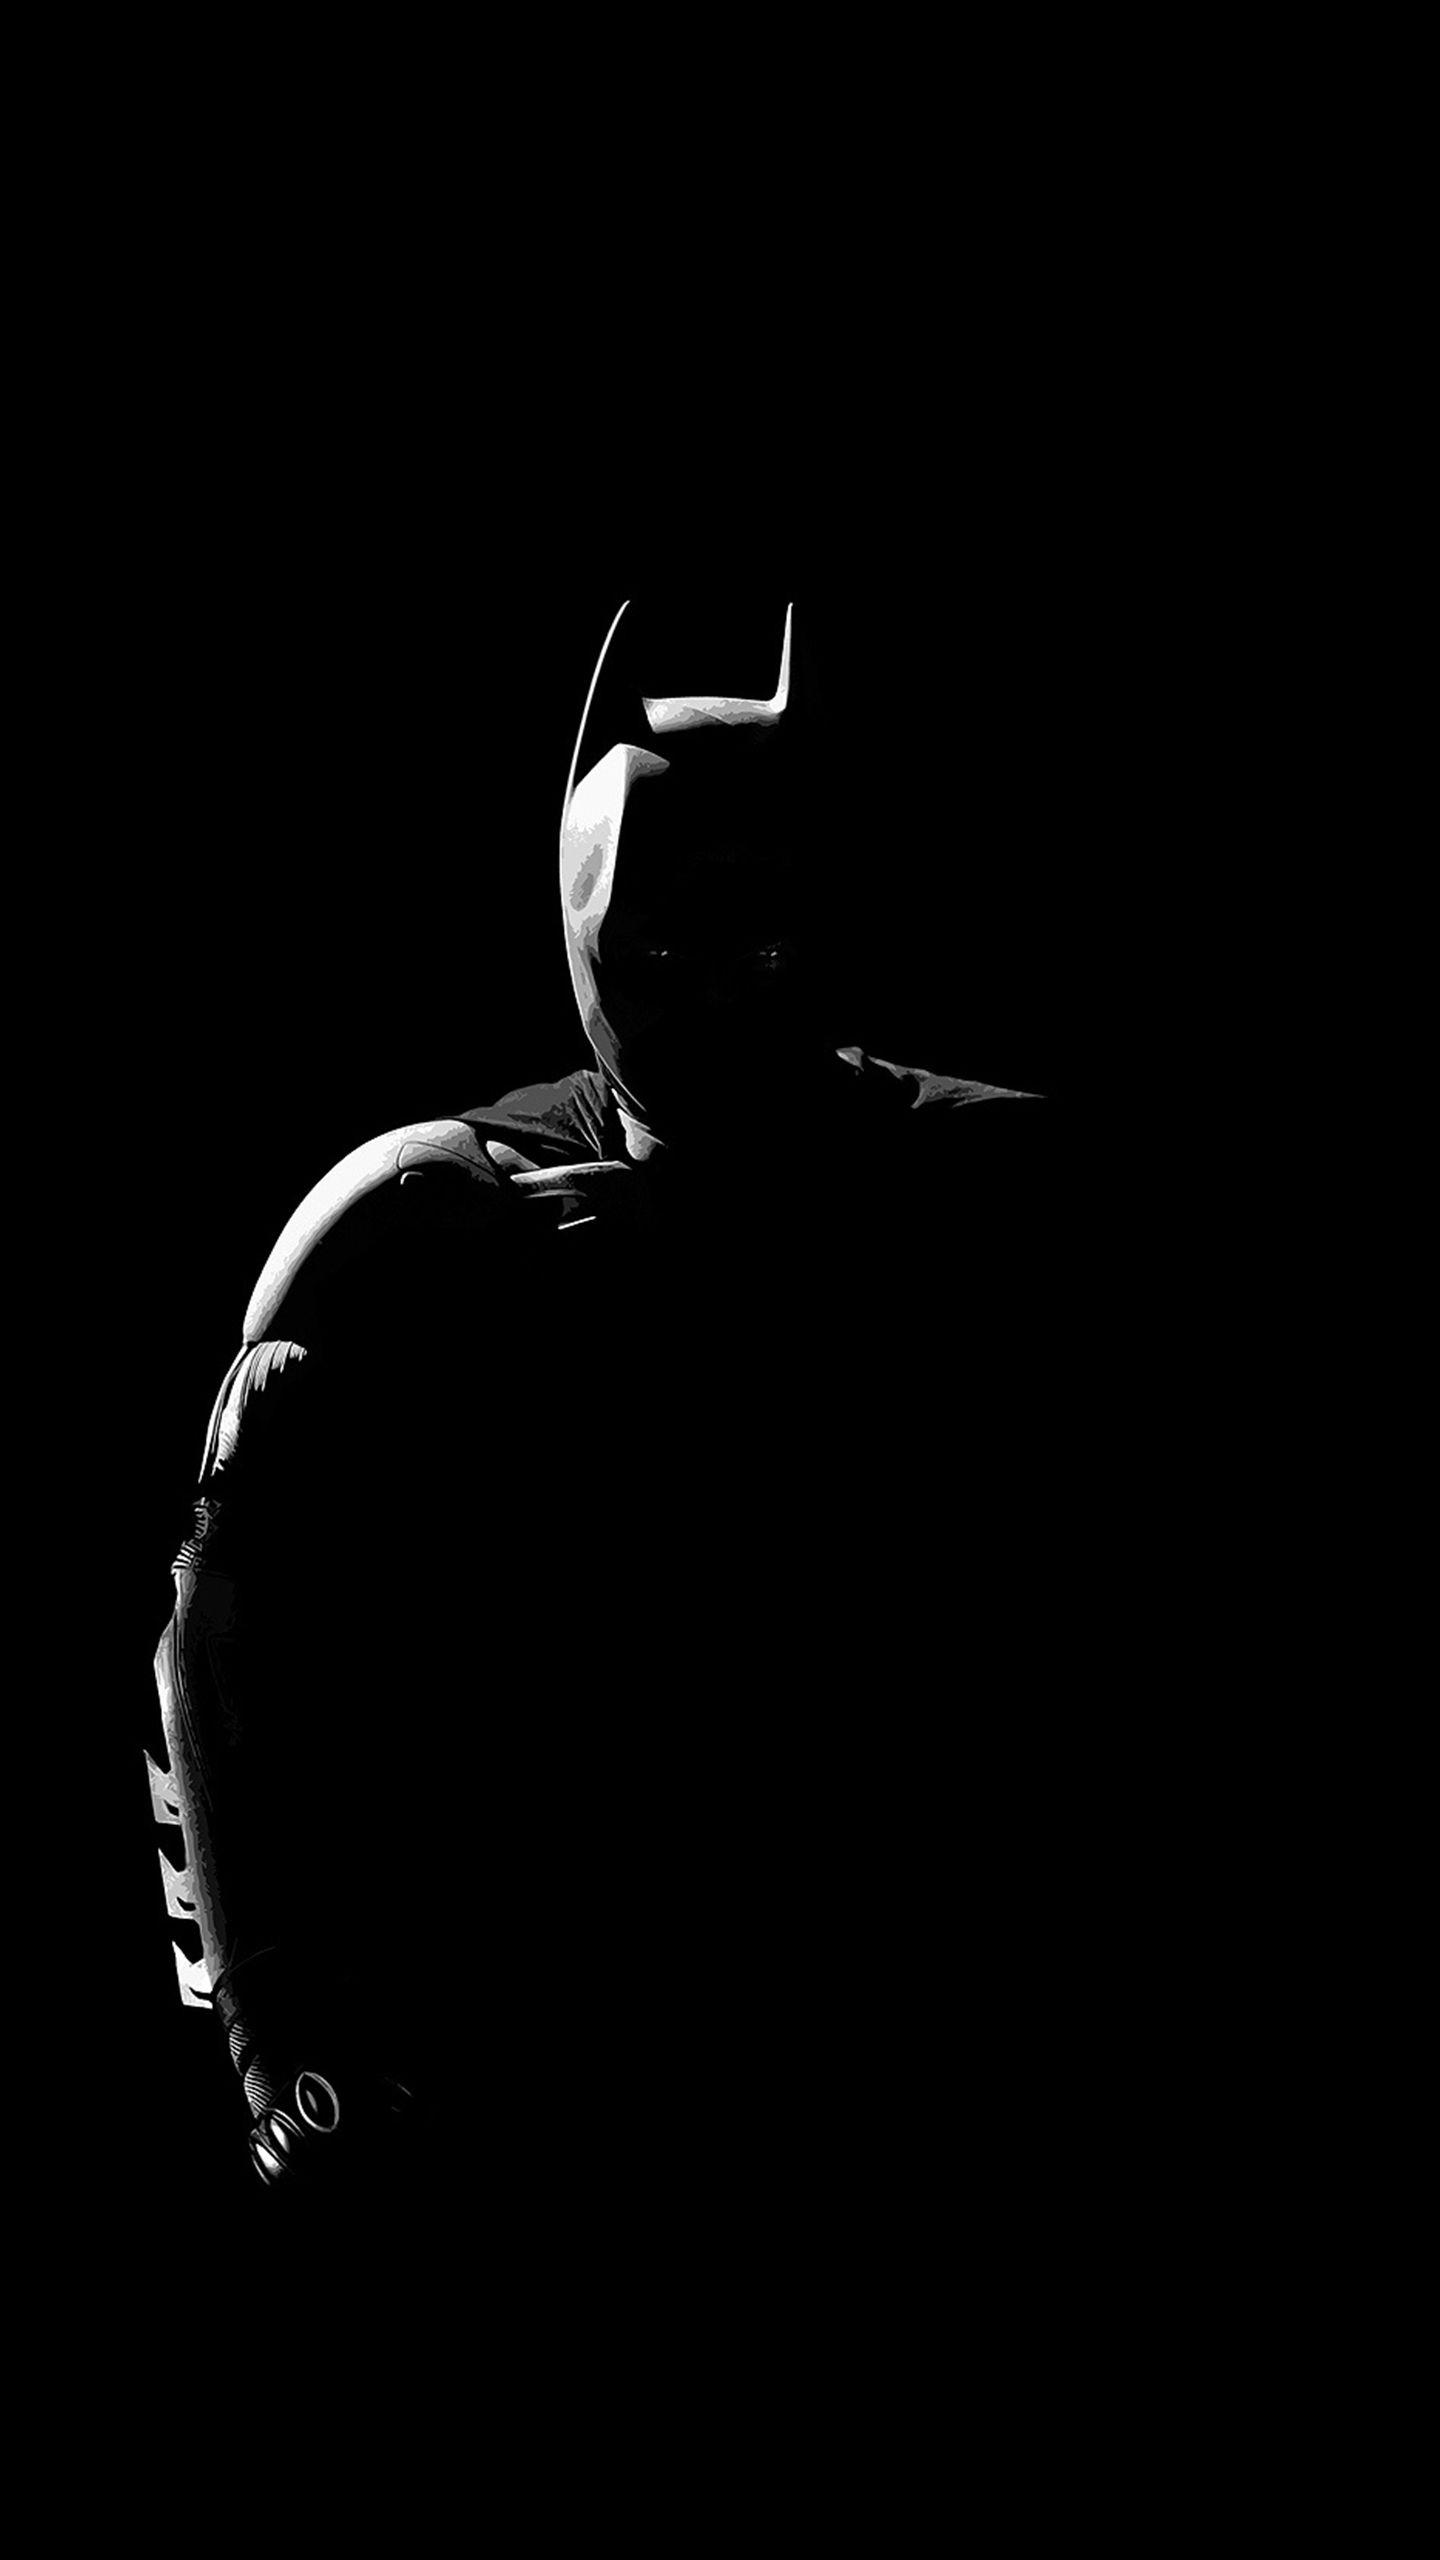 Dark Knight. Batman wallpaper iphone, Batman wallpaper, HD batman